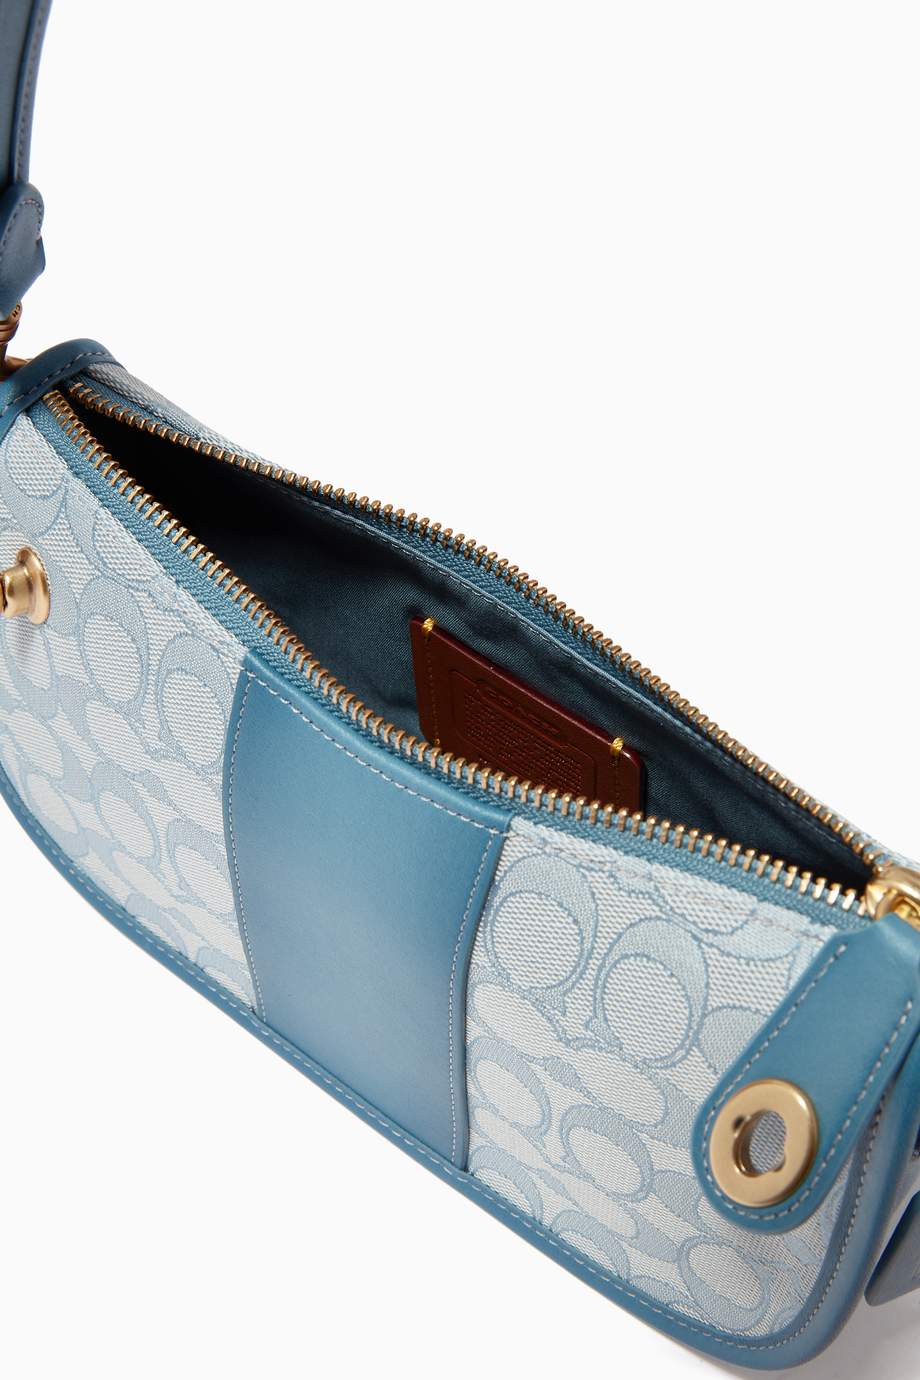 Shop Coach Blue Swinger Bag in Signature Jacquard for Women | Ounass UAE